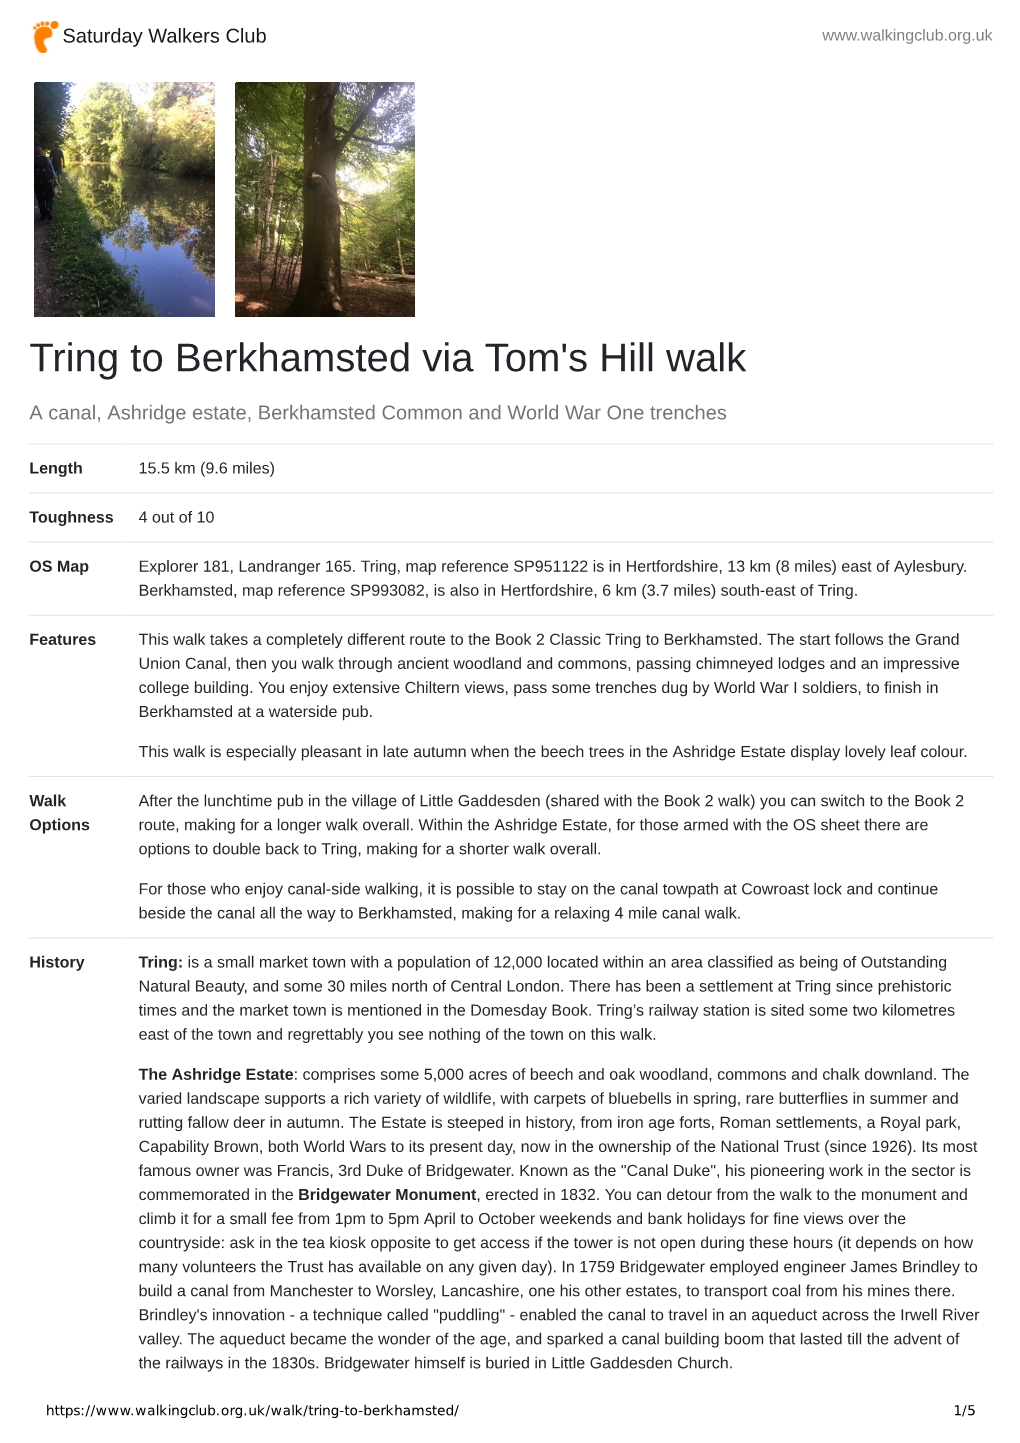 Tring to Berkhamsted Via Tom's Hill Walk